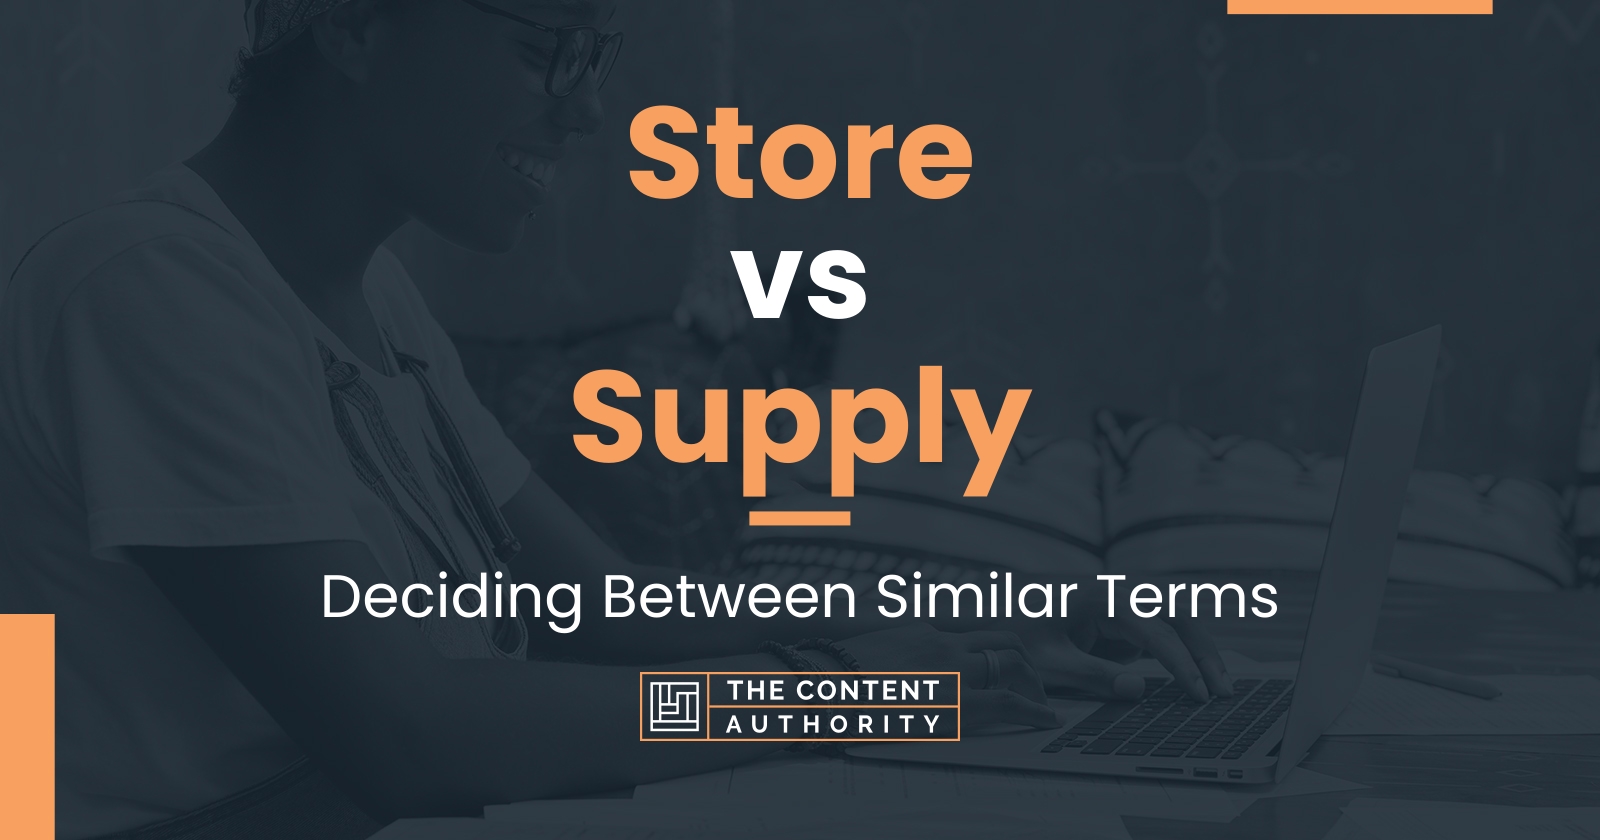 Store vs Supply: Deciding Between Similar Terms